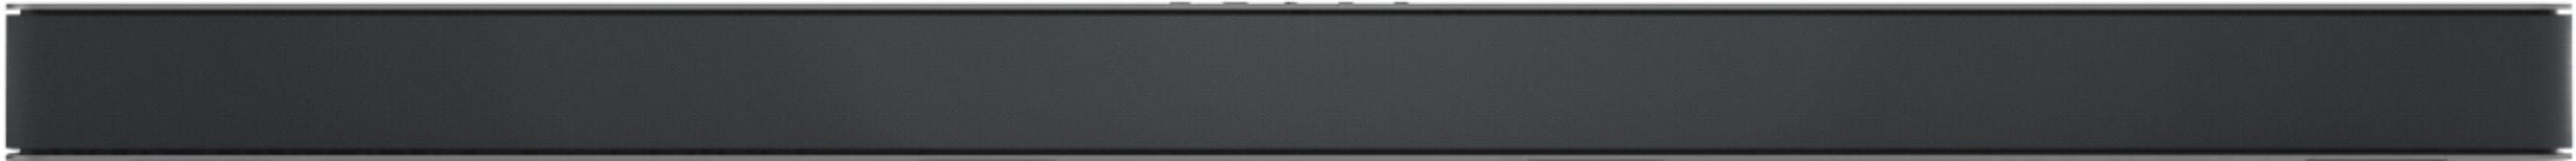 VIZIO M51ax-J6B-RB 5.1 Home Theater 36" Soundbar System Dolby Atmos - Certified Refurbished